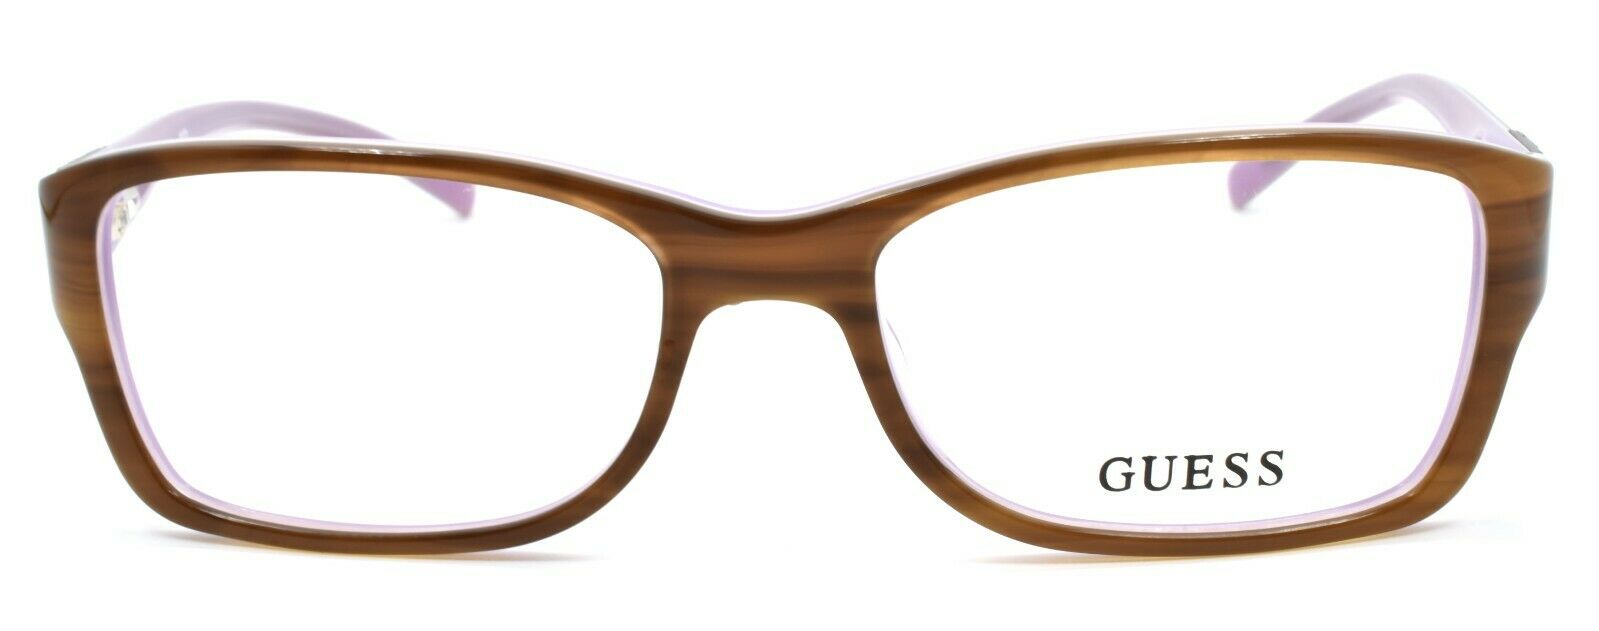 2-GUESS GU2274 AMB Women's Eyeglasses Frames 52-16-135 Amber / Lilac-715583416130-IKSpecs